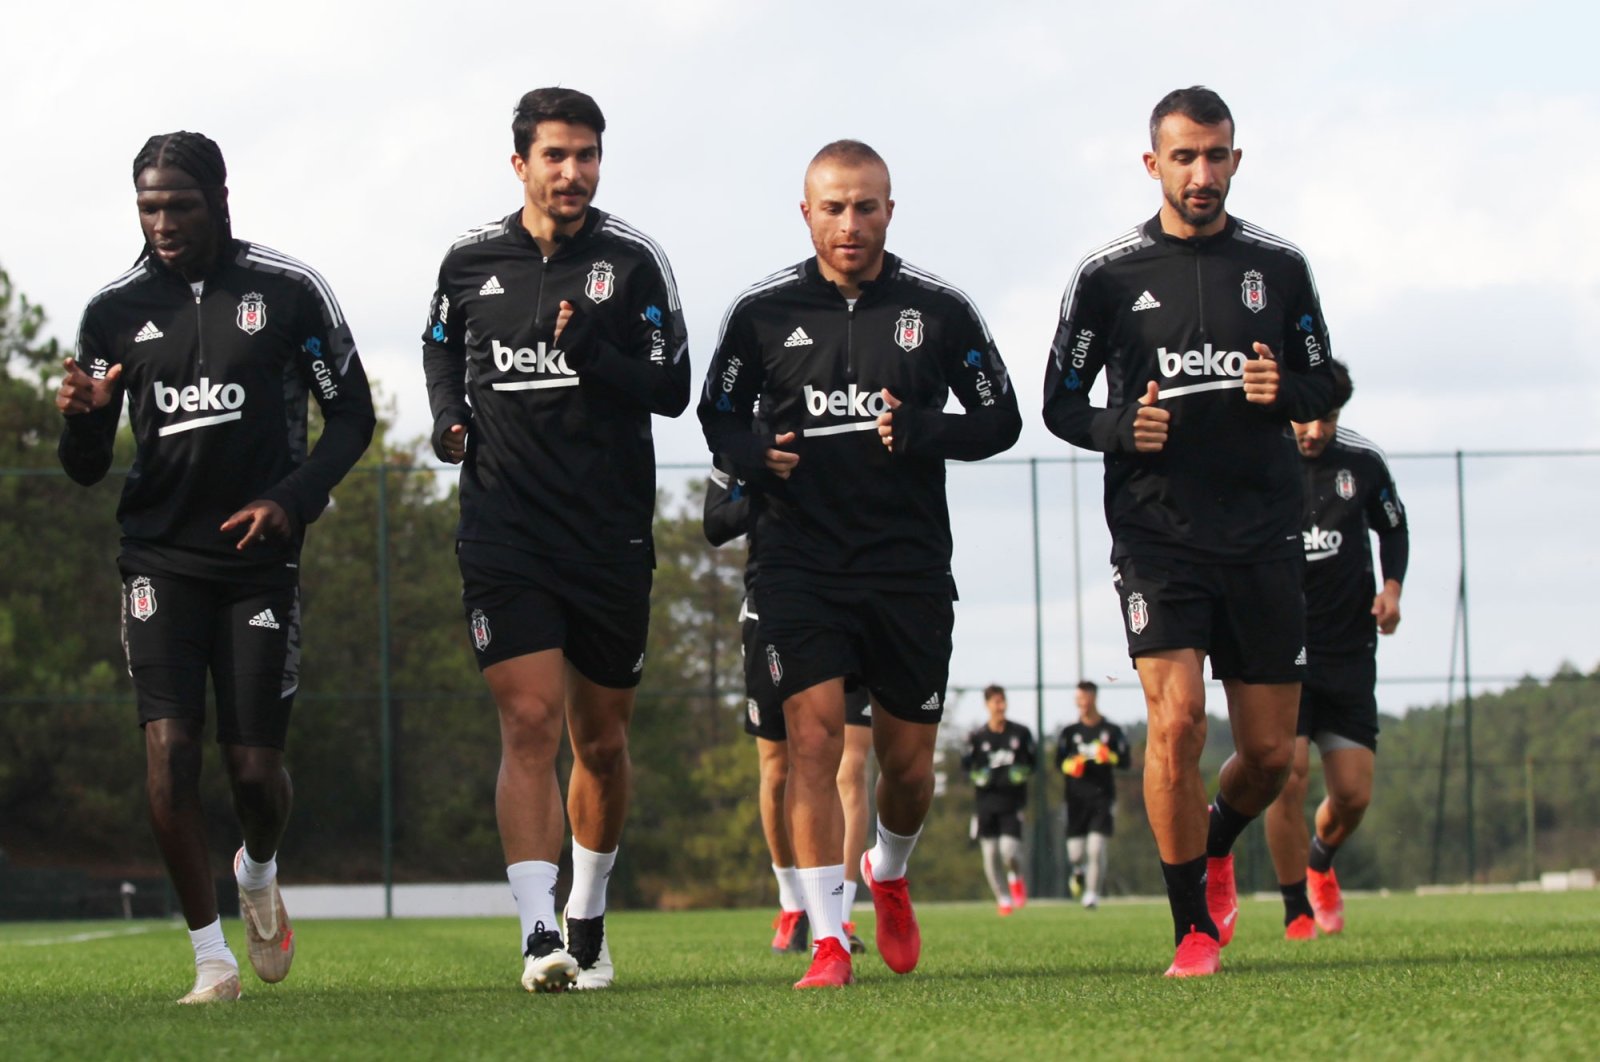 Beşiktaş players attend a training session ahead of a Süper Lig match against Yeni Malatyaspor, Istanbul, Turkey, Sept. 6, 2021. (DHA Photo)